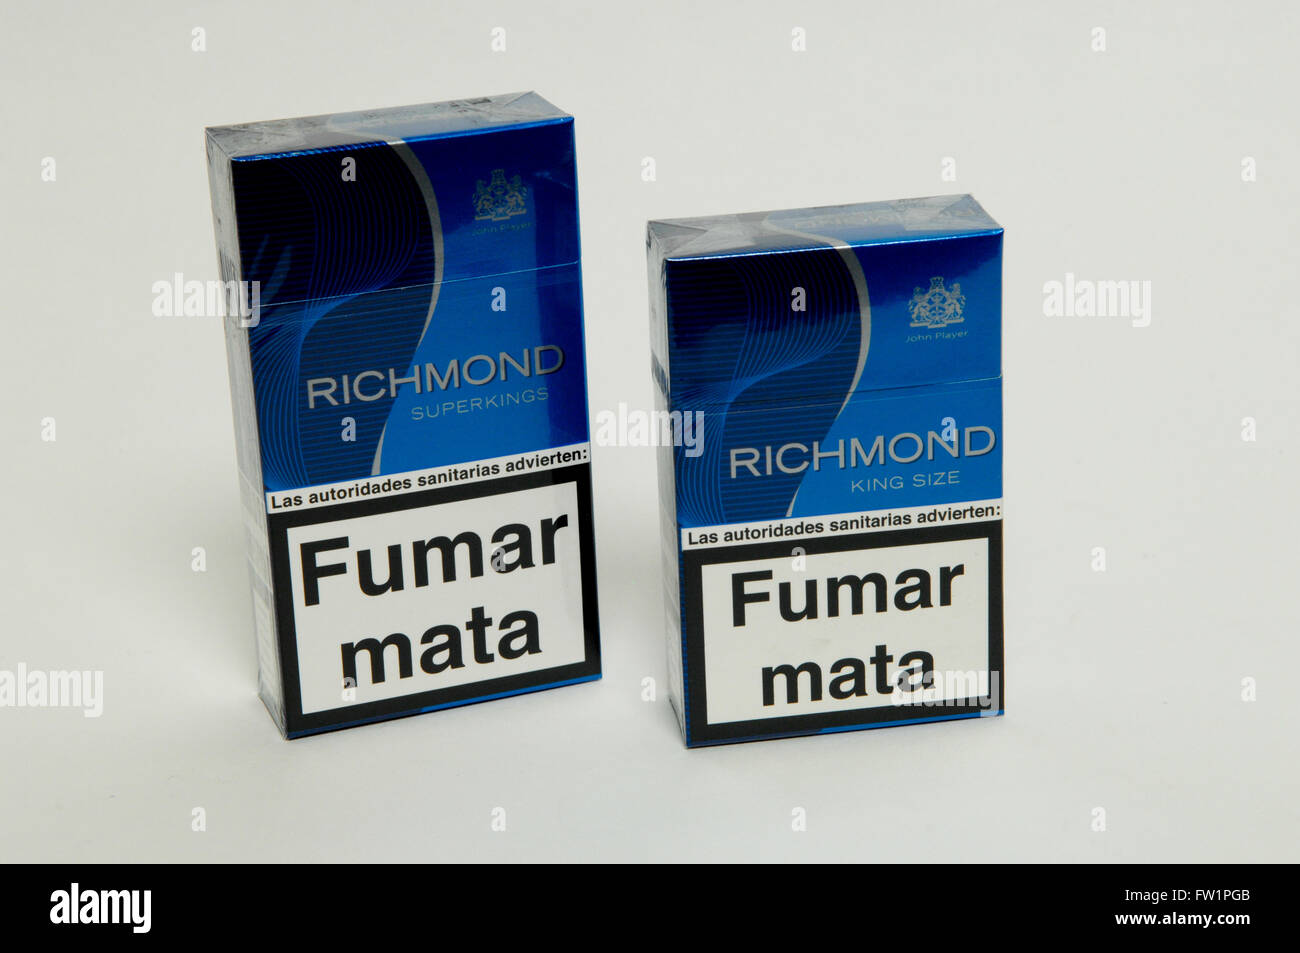 Richmond King Size Cigarette Packet Stock Photos Richmond King